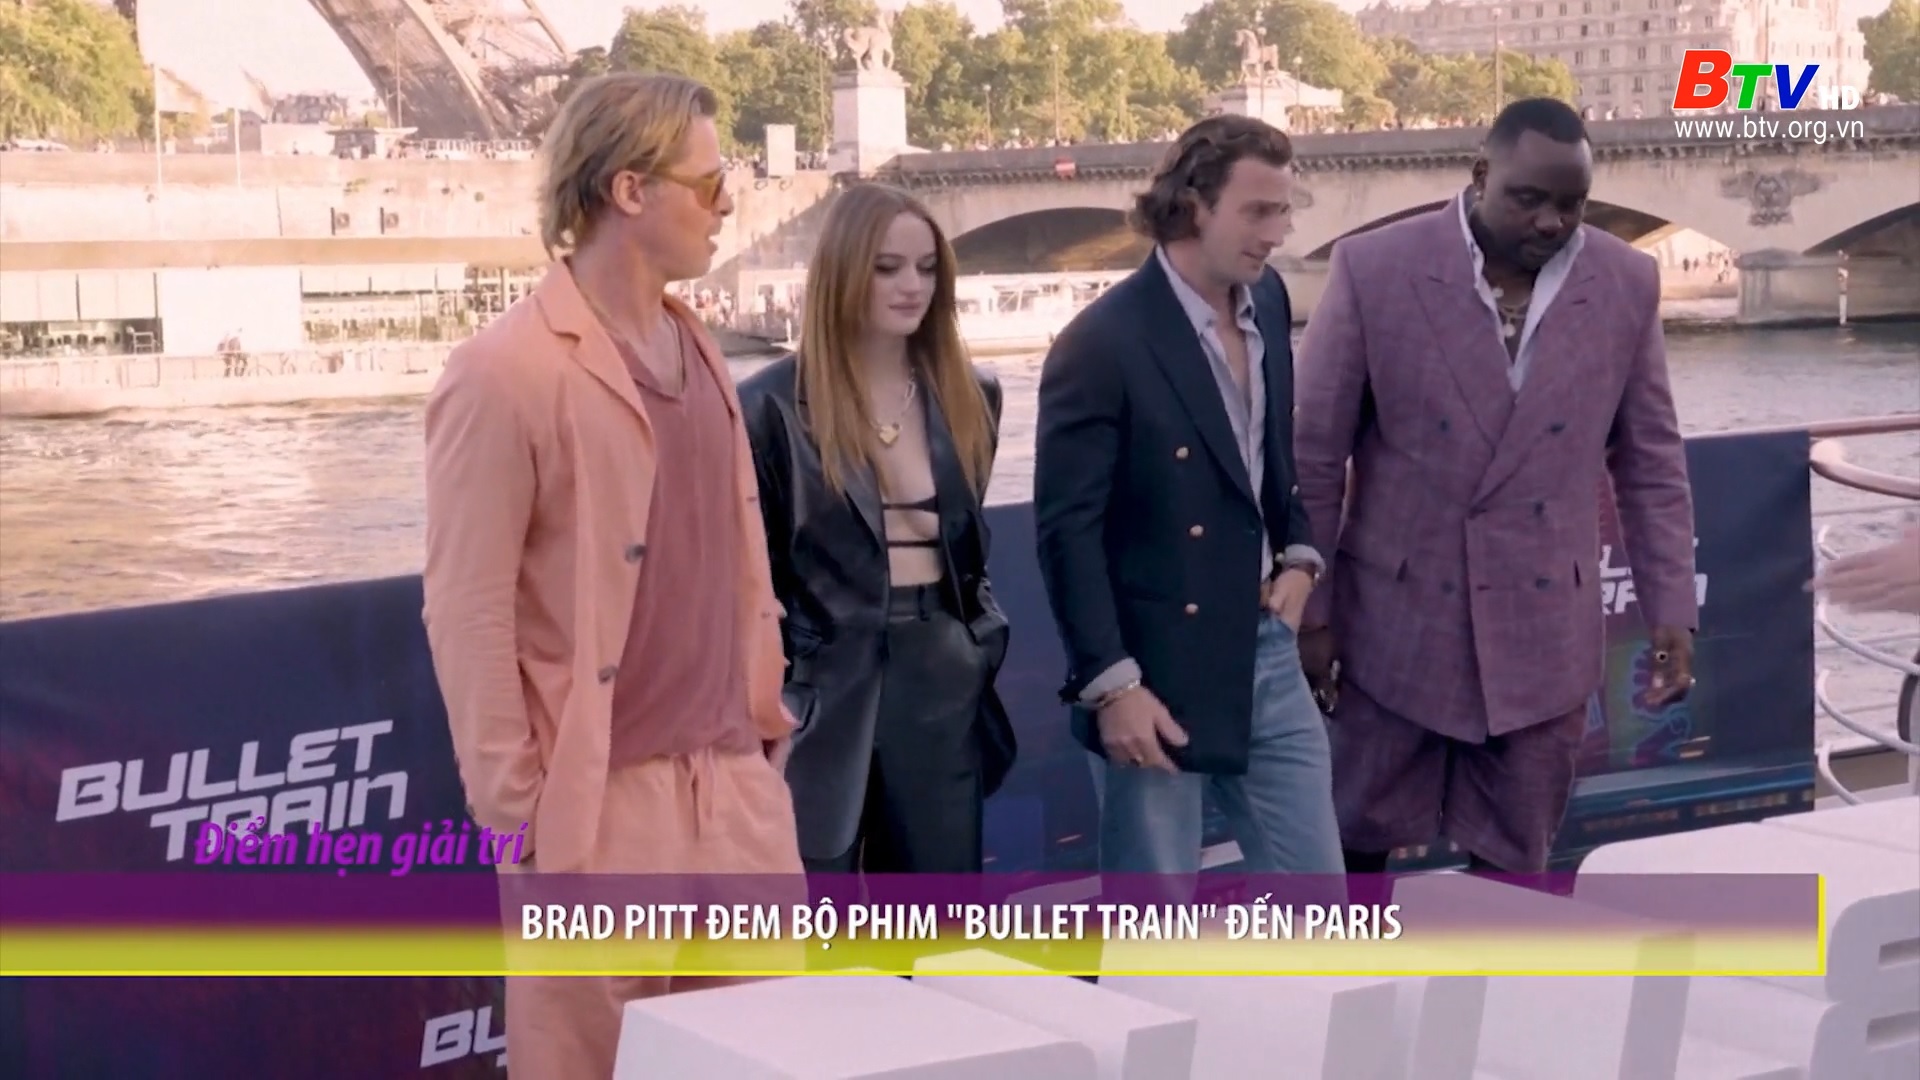 Brad Pitt đem bộ phim “Bullet Train” đến Paris